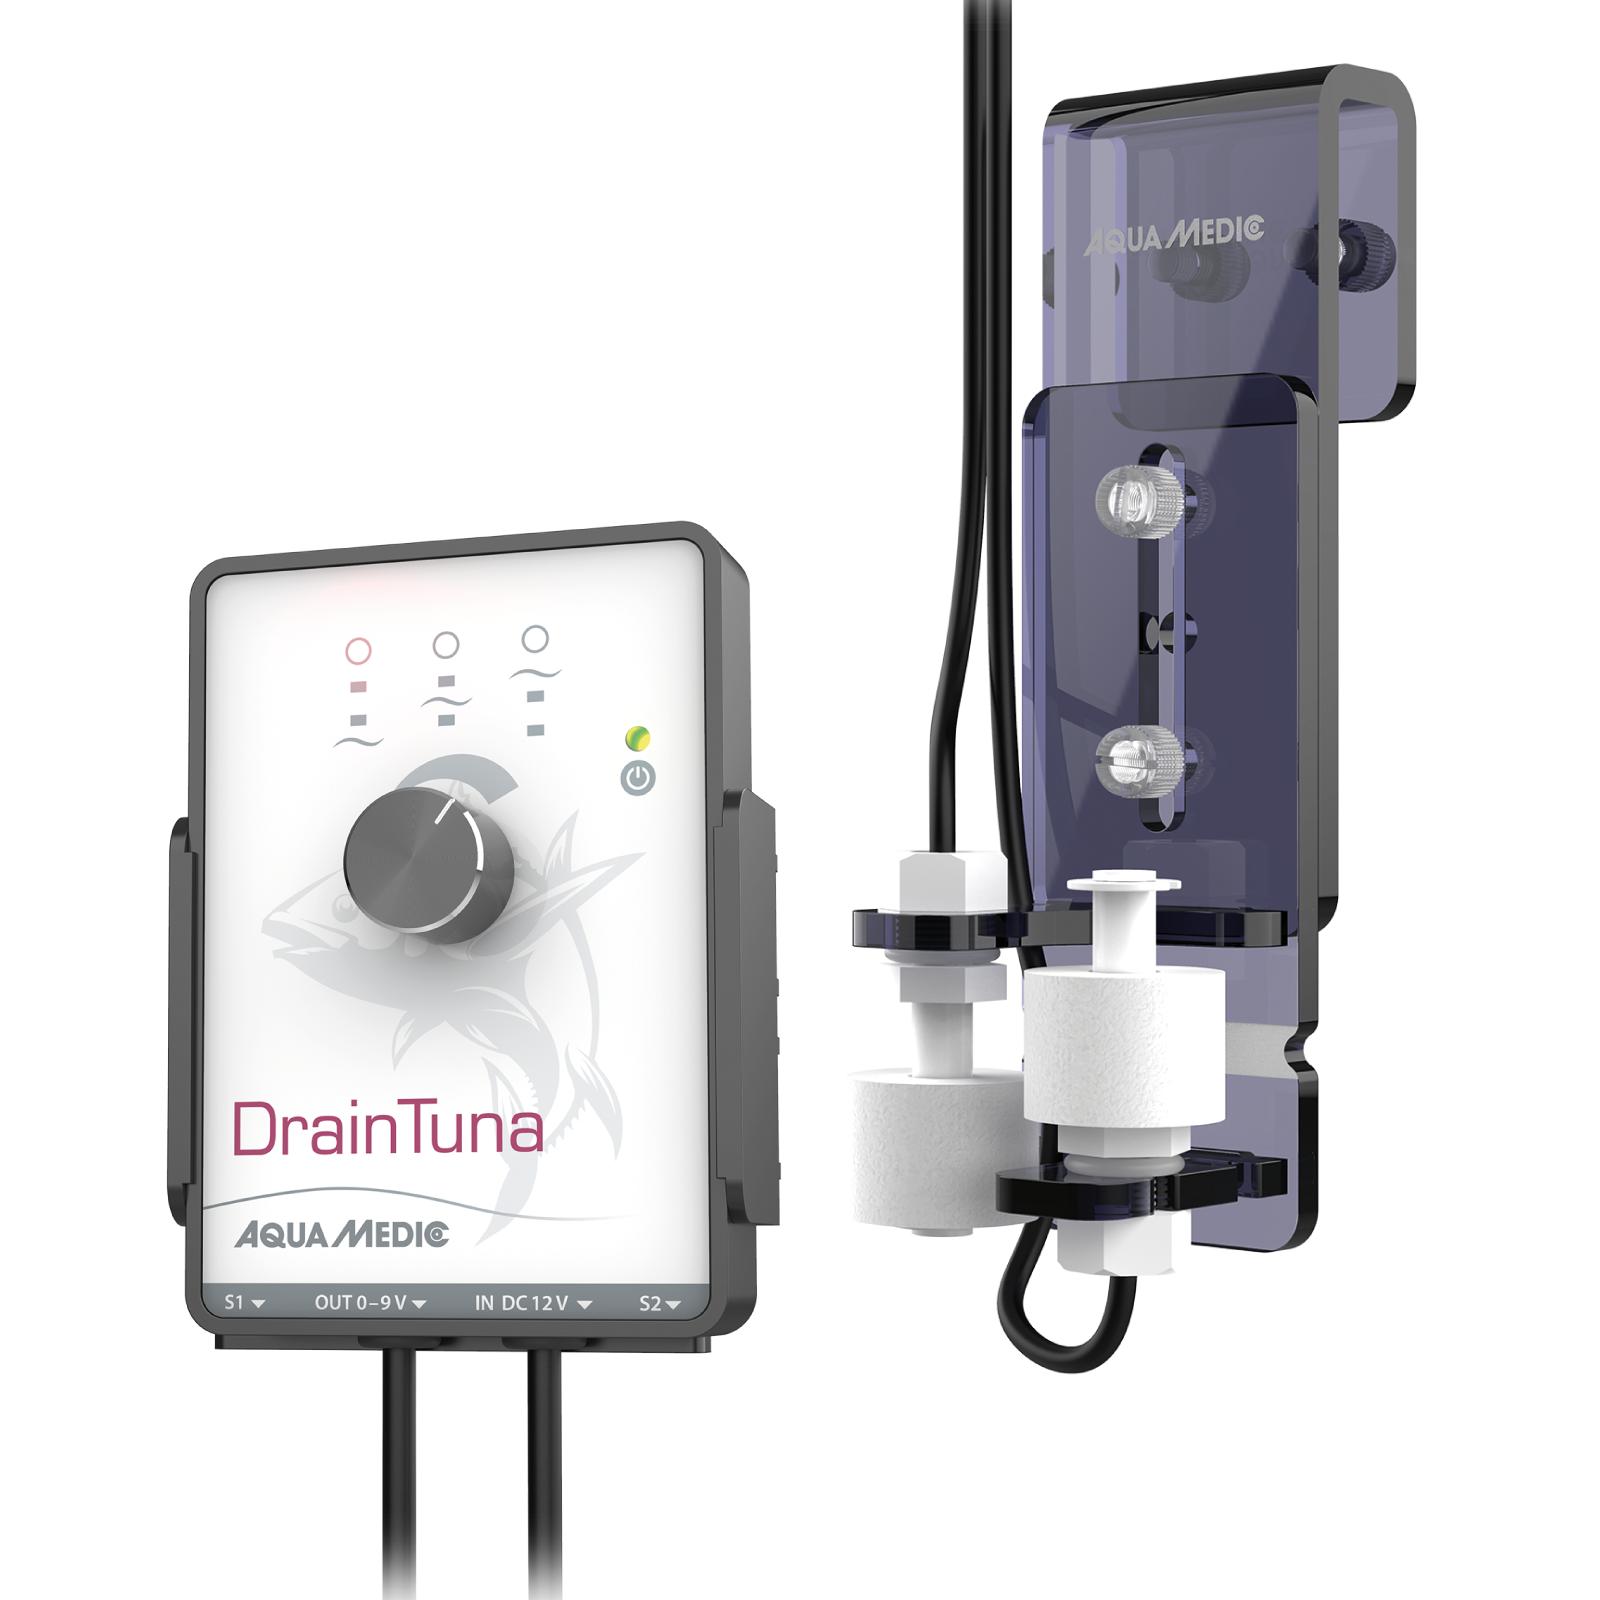 DrainTuna Elektronische Wasserstandsregulierung für den Ablaufschacht - Aqua Medic